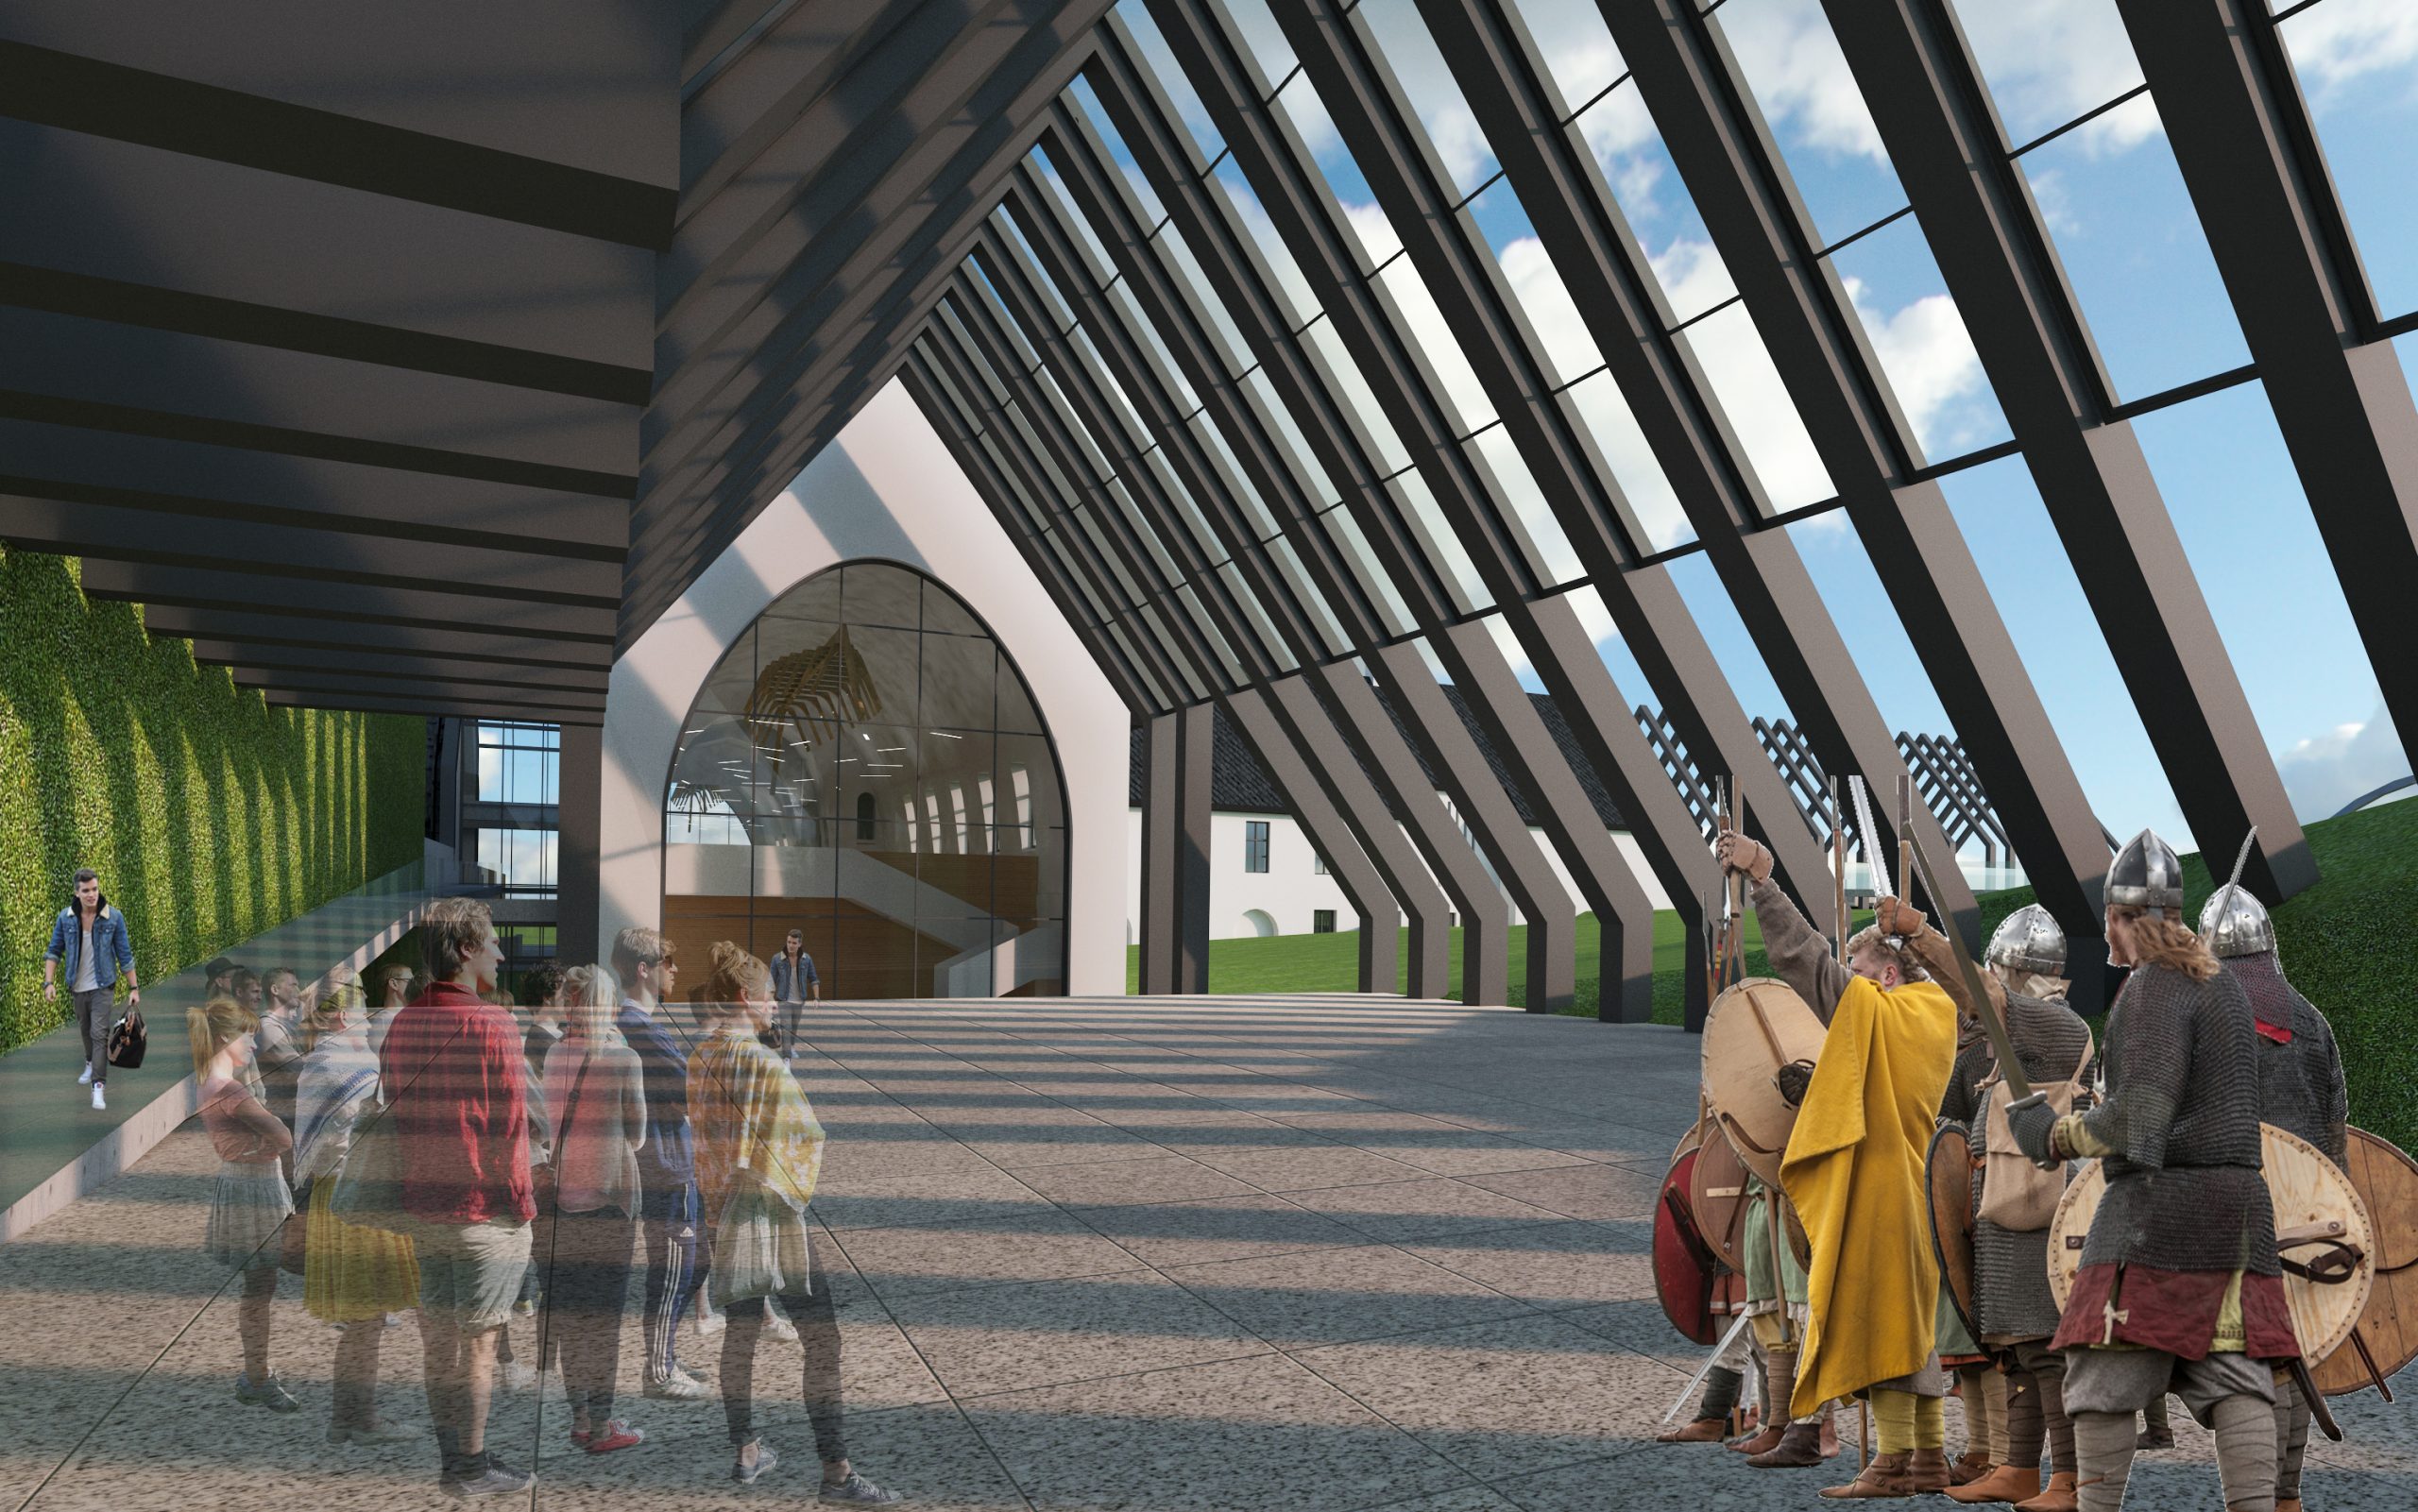 https://nbc-arhitect.ro/wp-content/uploads/2020/10/NBC-Arhitect-_-contests-_-Viking-Museum-Oslo_2-scaled.jpg